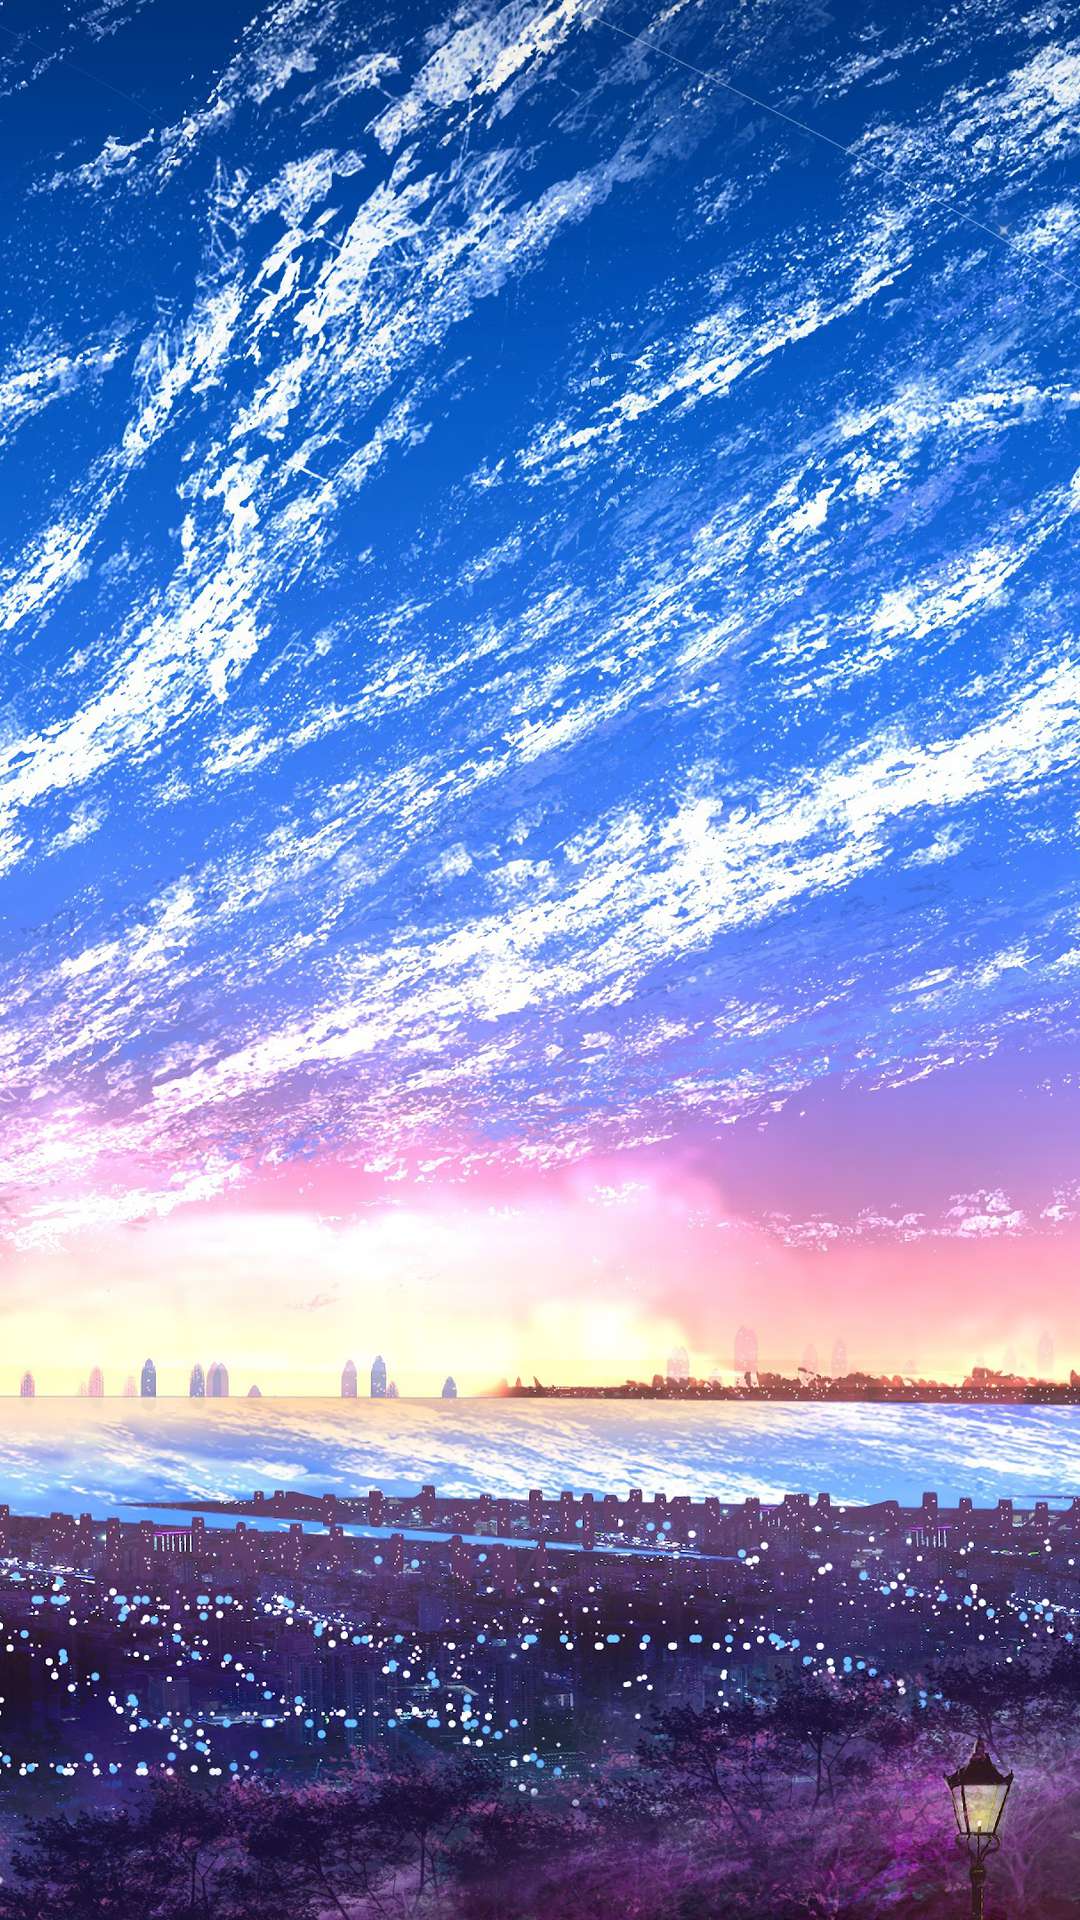 Share 79 Anime Scenery Wallpaper Iphone Super Hot In Duhocakina